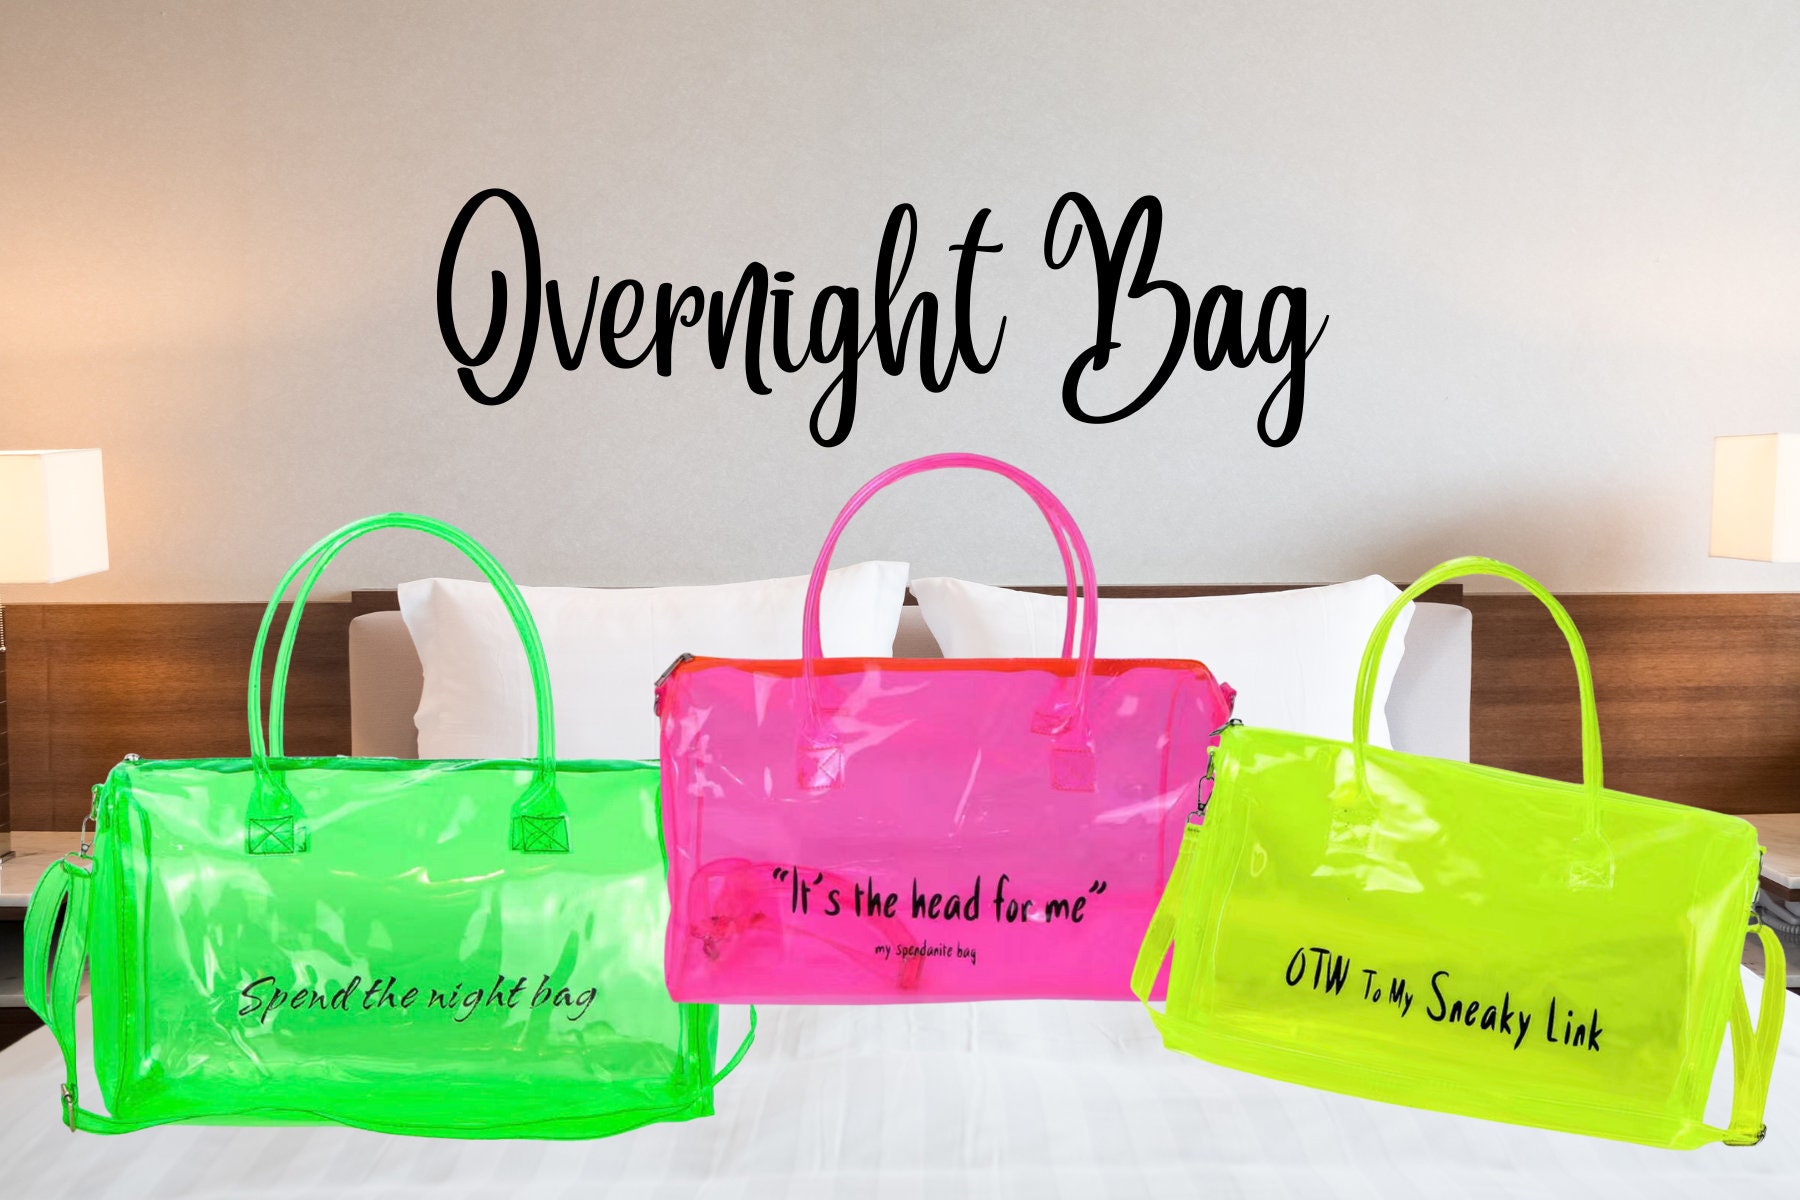 Spend the Night Bag 